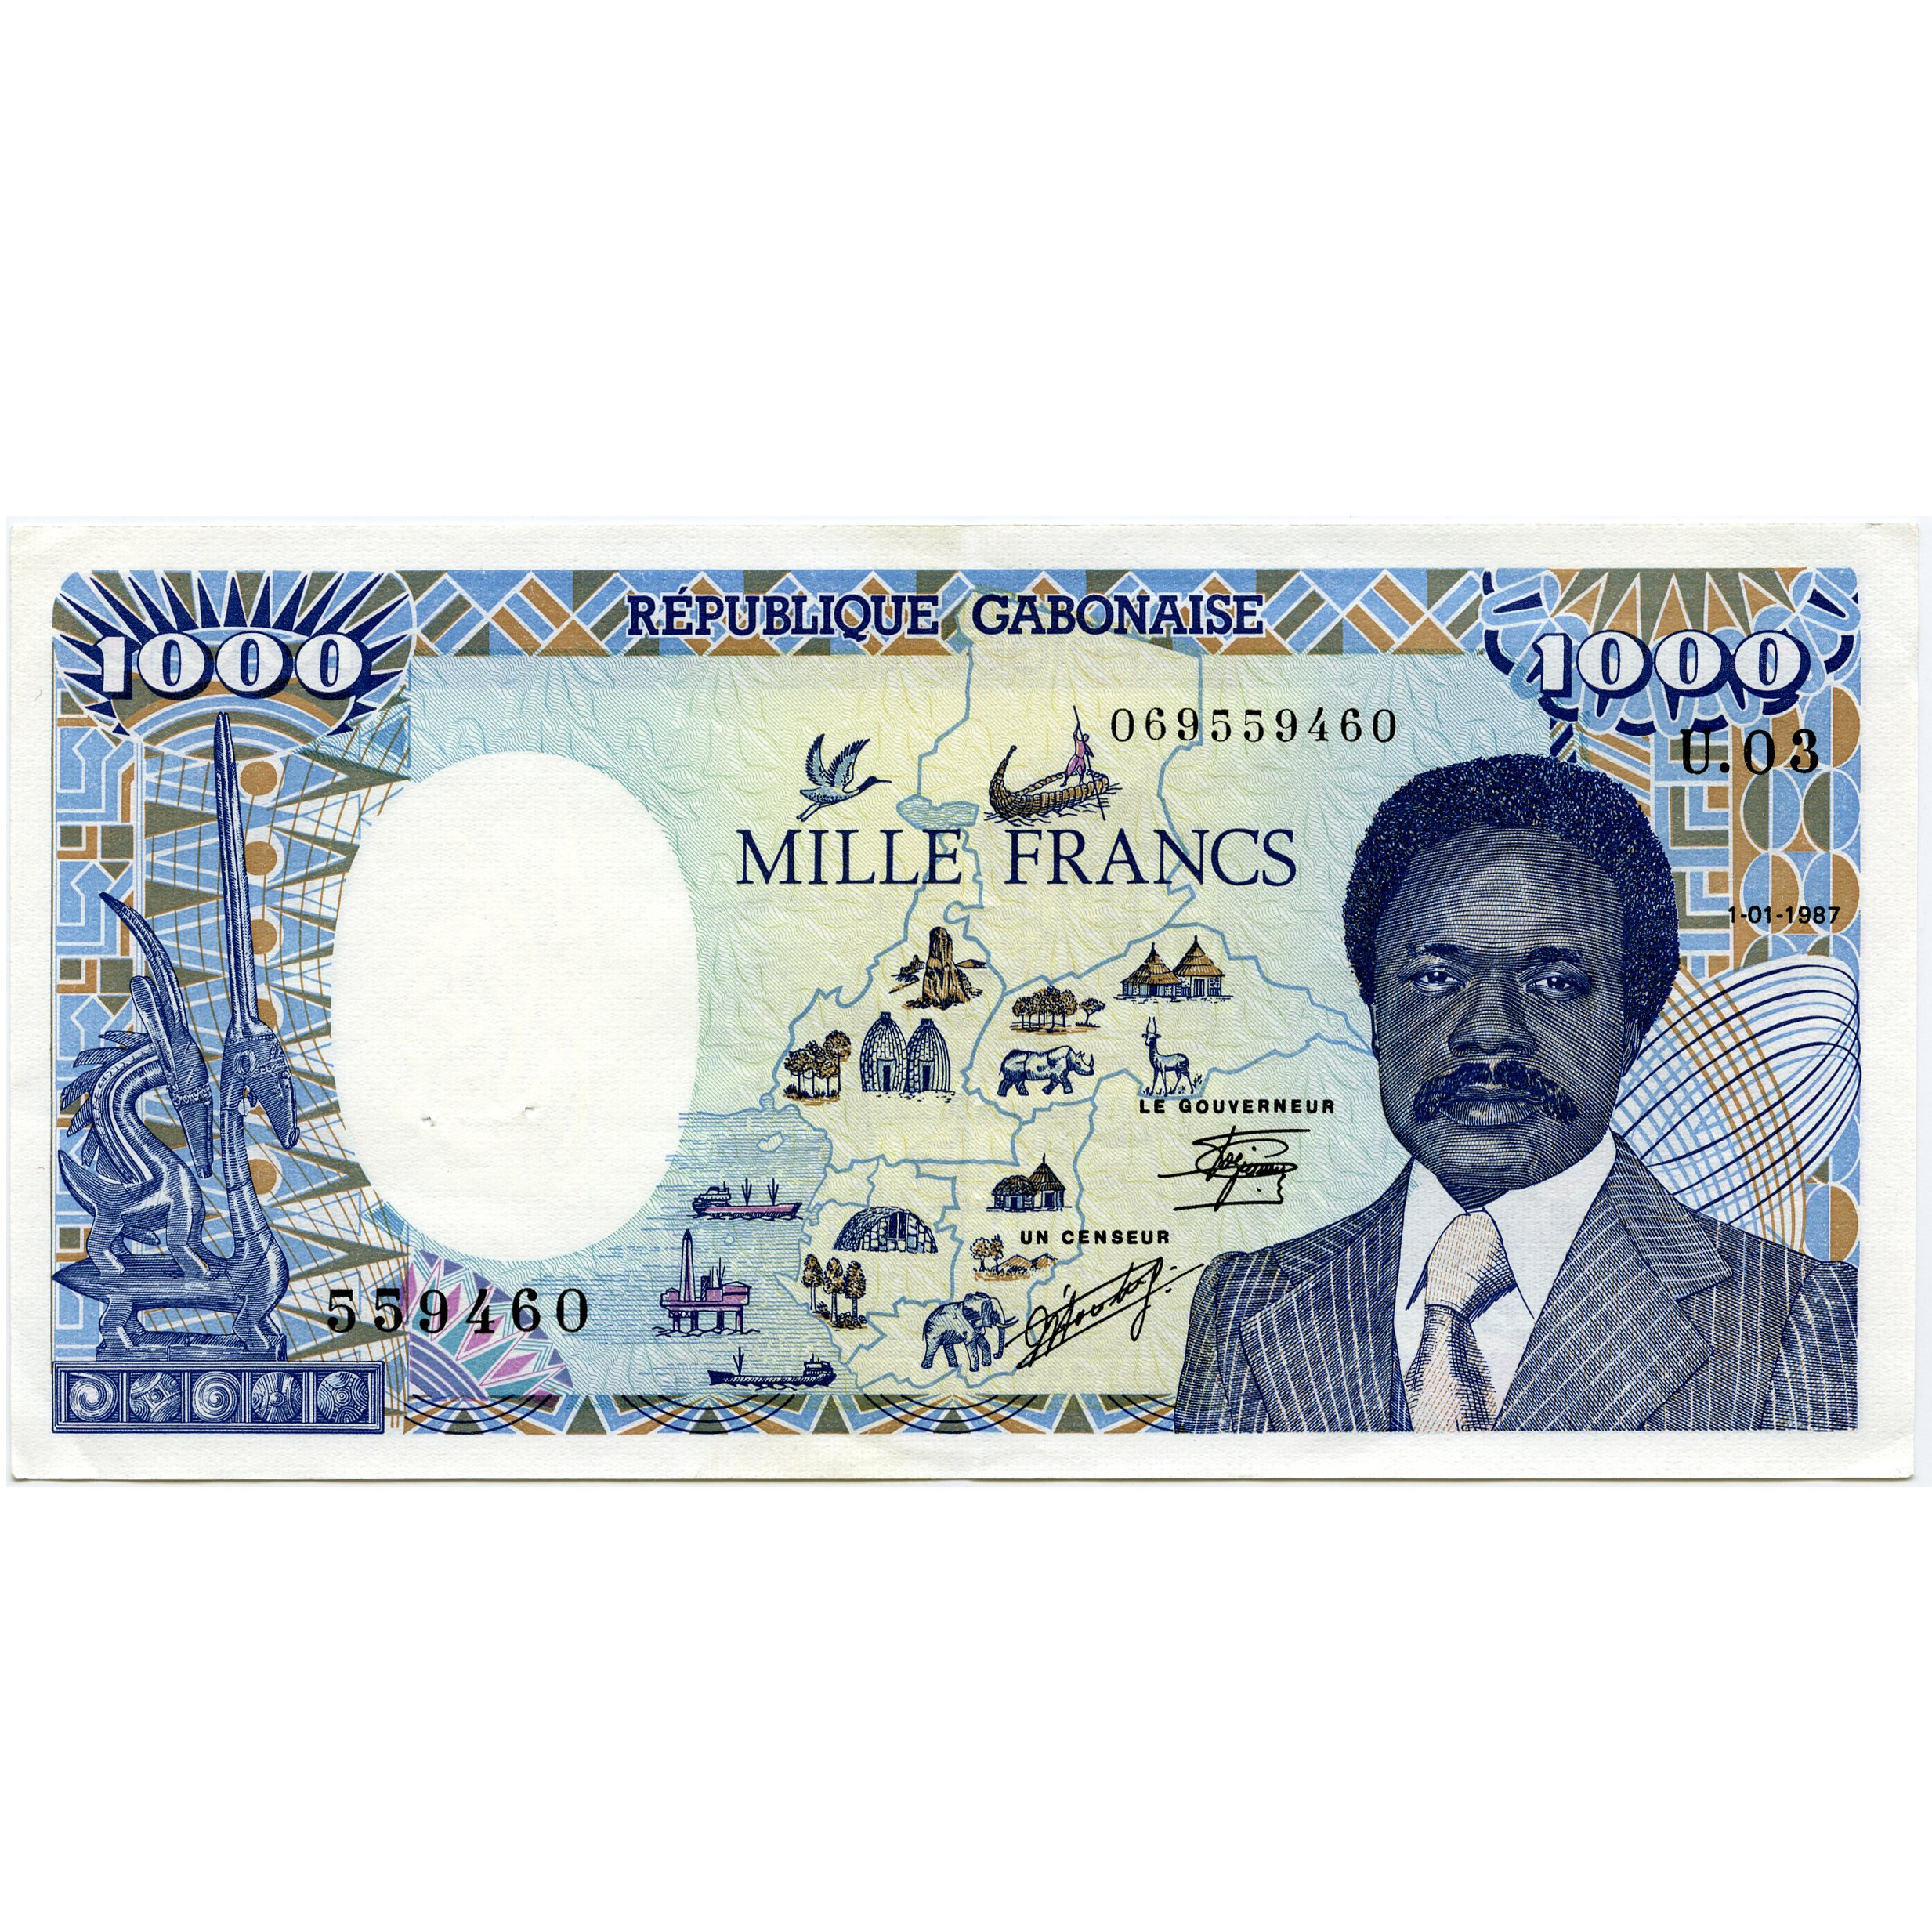 Gabon - 1 000 Francs - U 03 559460 avers